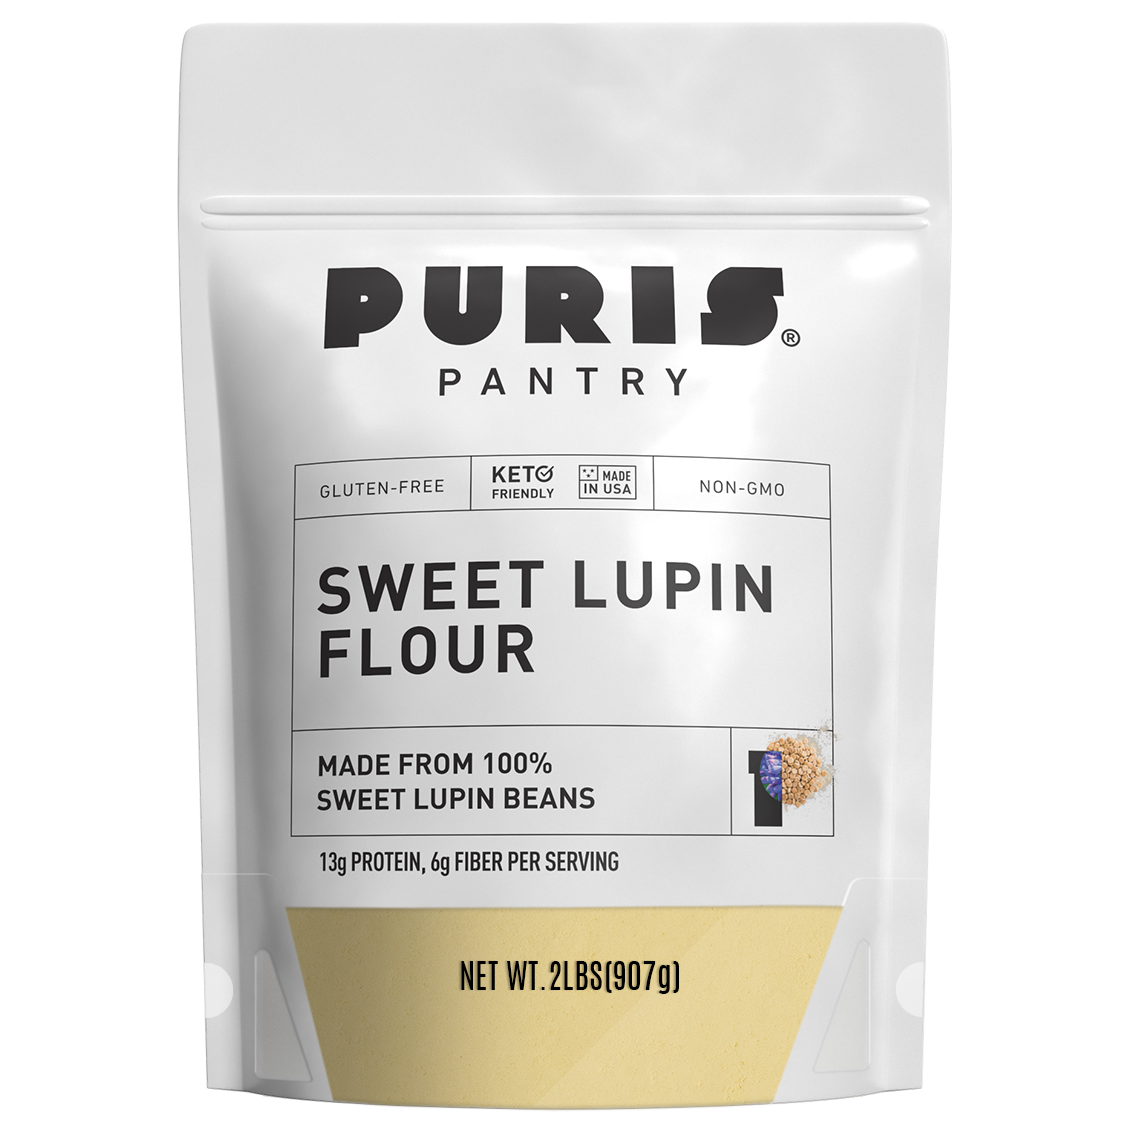 PURIS Sweet Lupin Flour